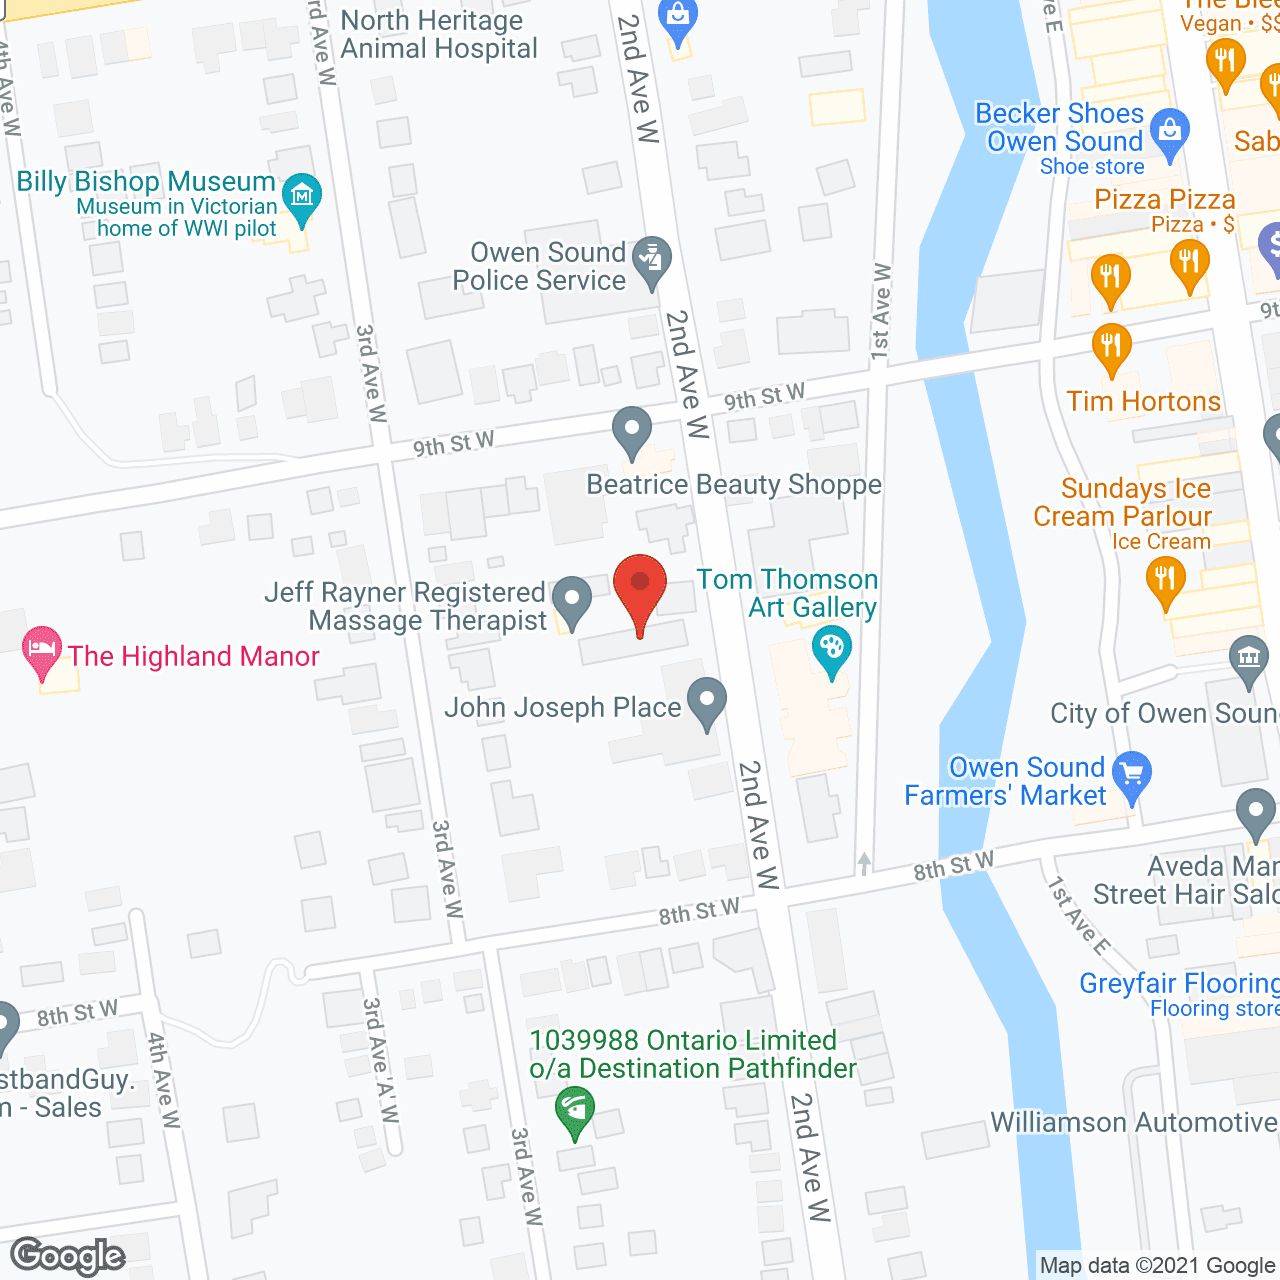 John Joseph Place in google map